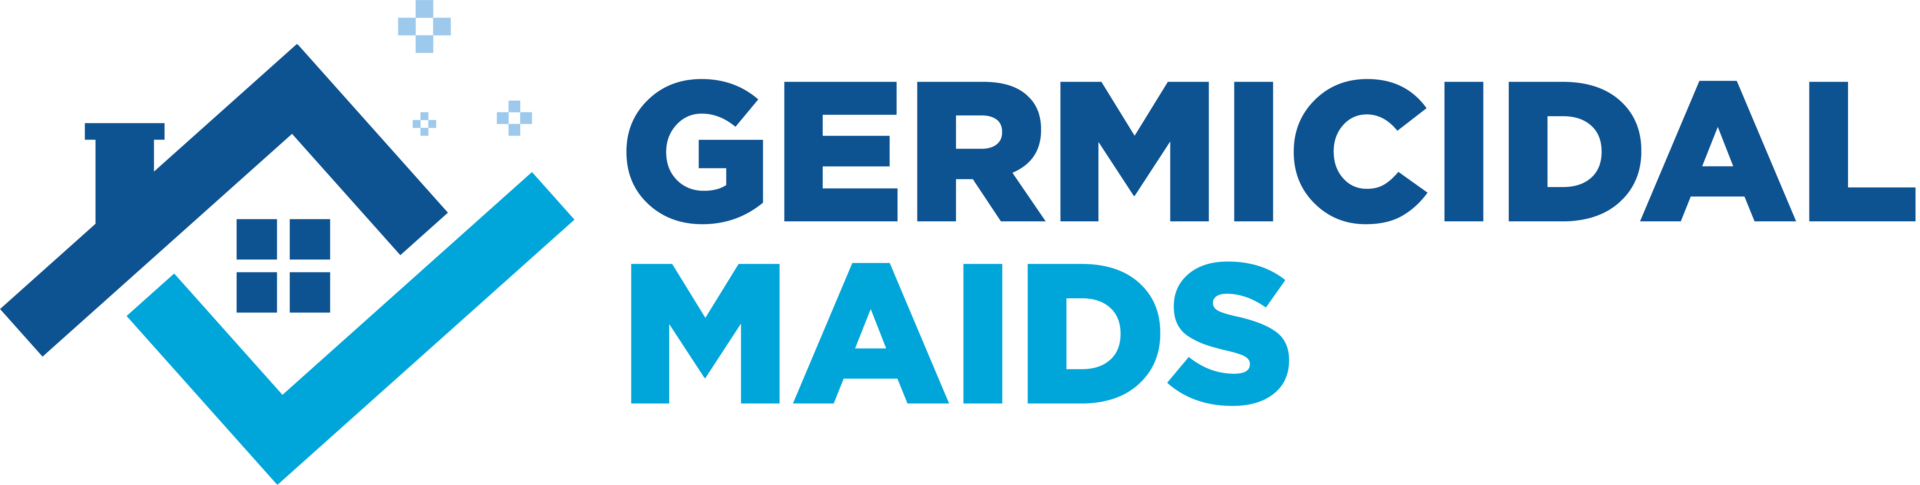 Germicidal Maids logo